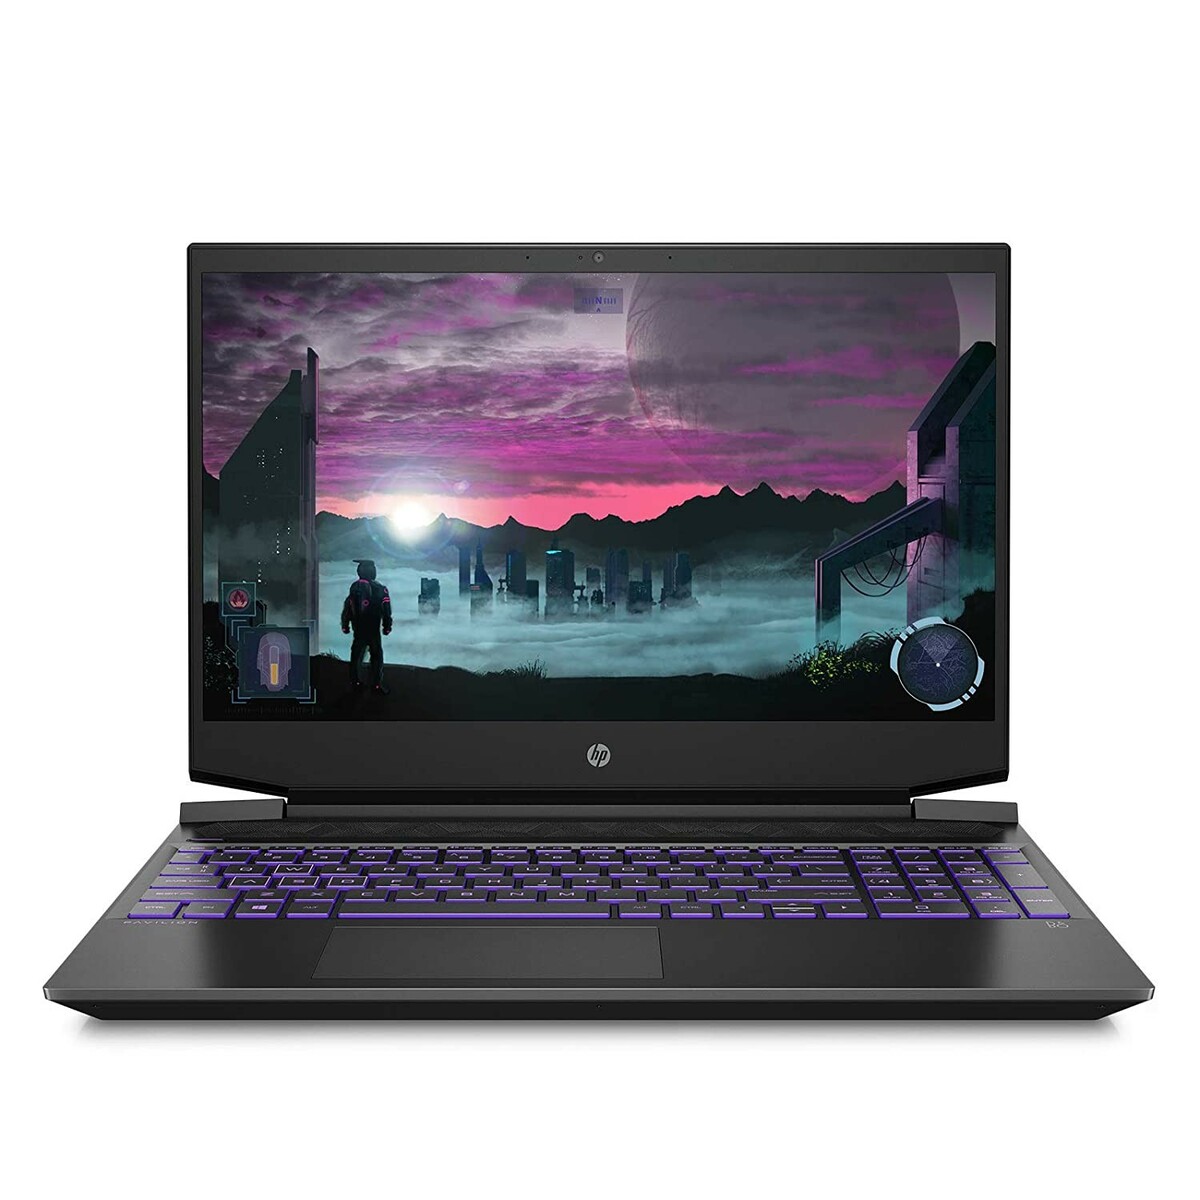 HP Pavilion Gaming Laptop 15 EC1050AX AMD R5 15.6" Win 10 Shadow Black